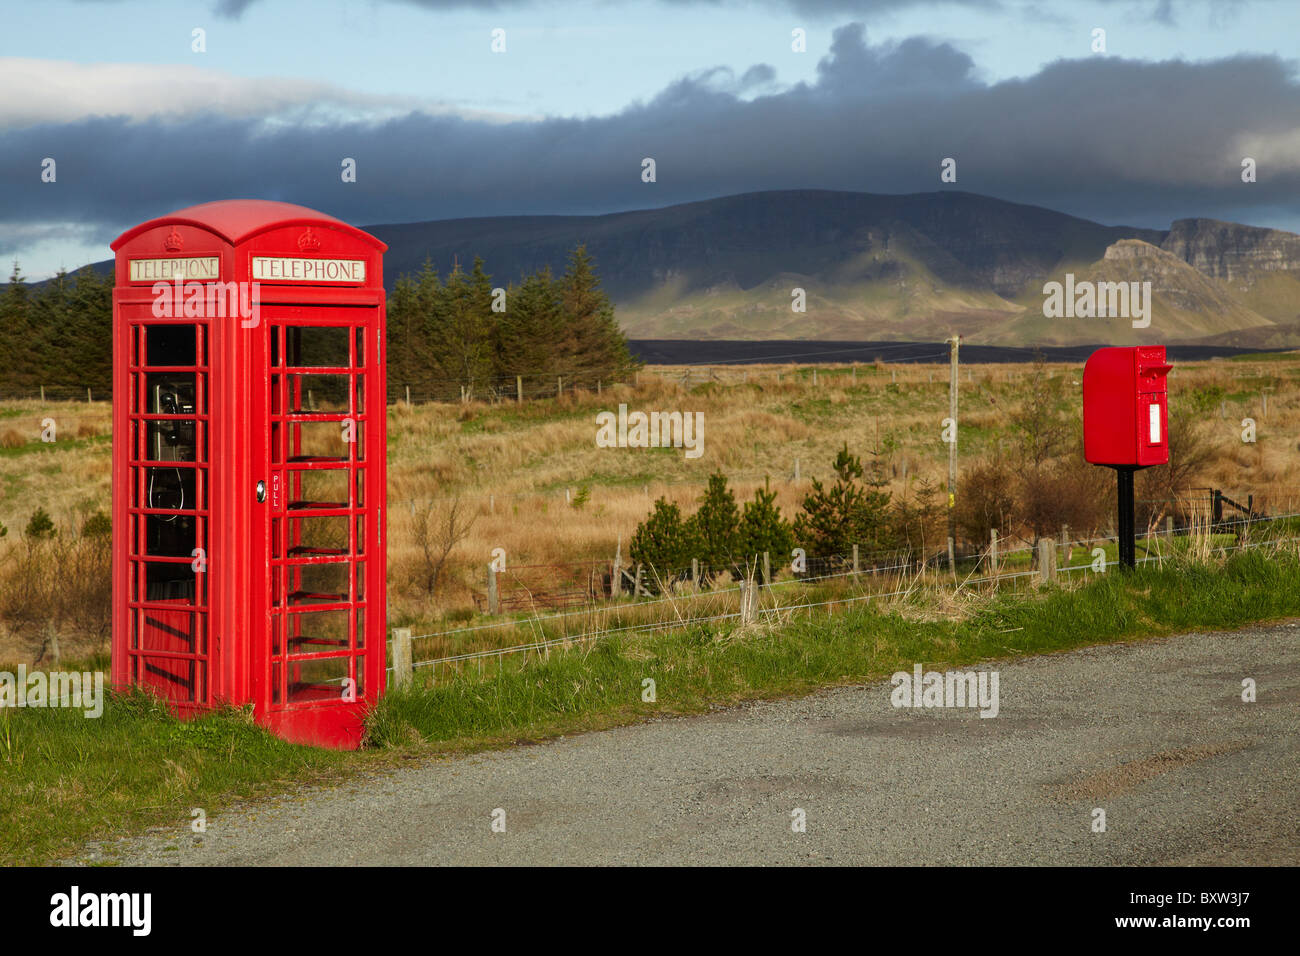 Public Phone Box and Post Box, Ellishadder, near Staffin, Trotternish Peninsula, Isle of Skye, Scotland, United Kingdom Stock Photo